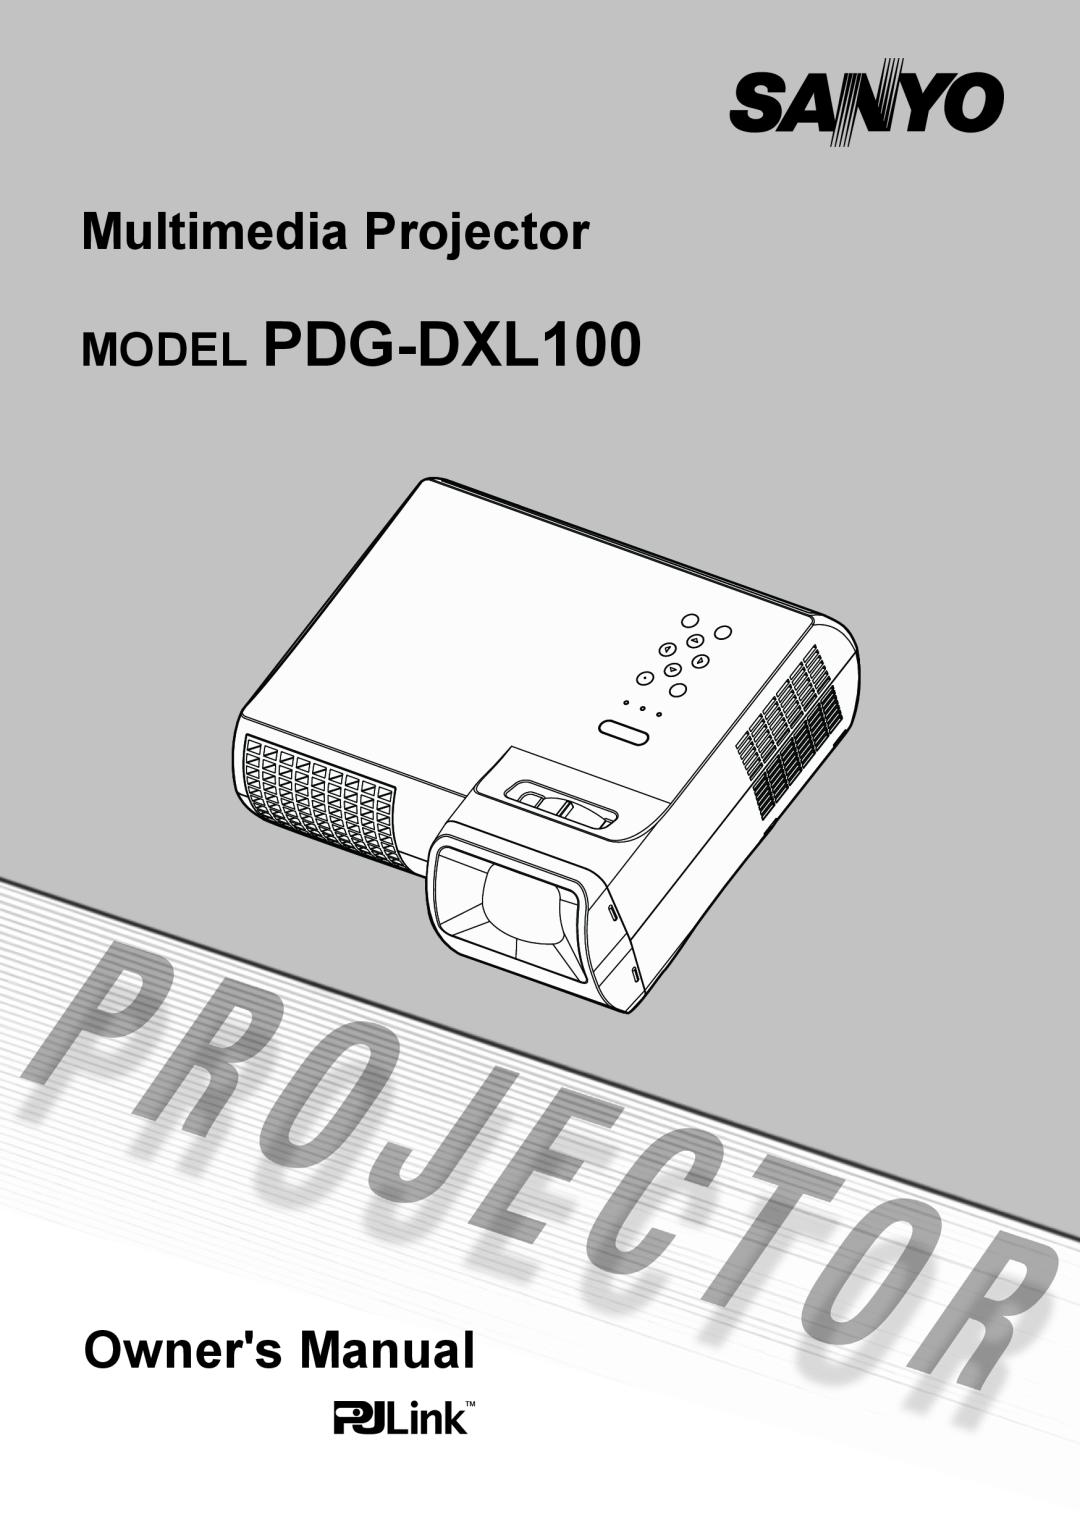 Sanyo owner manual MODEL PDG-DXL100, Multimedia Projector, Owners Manual 